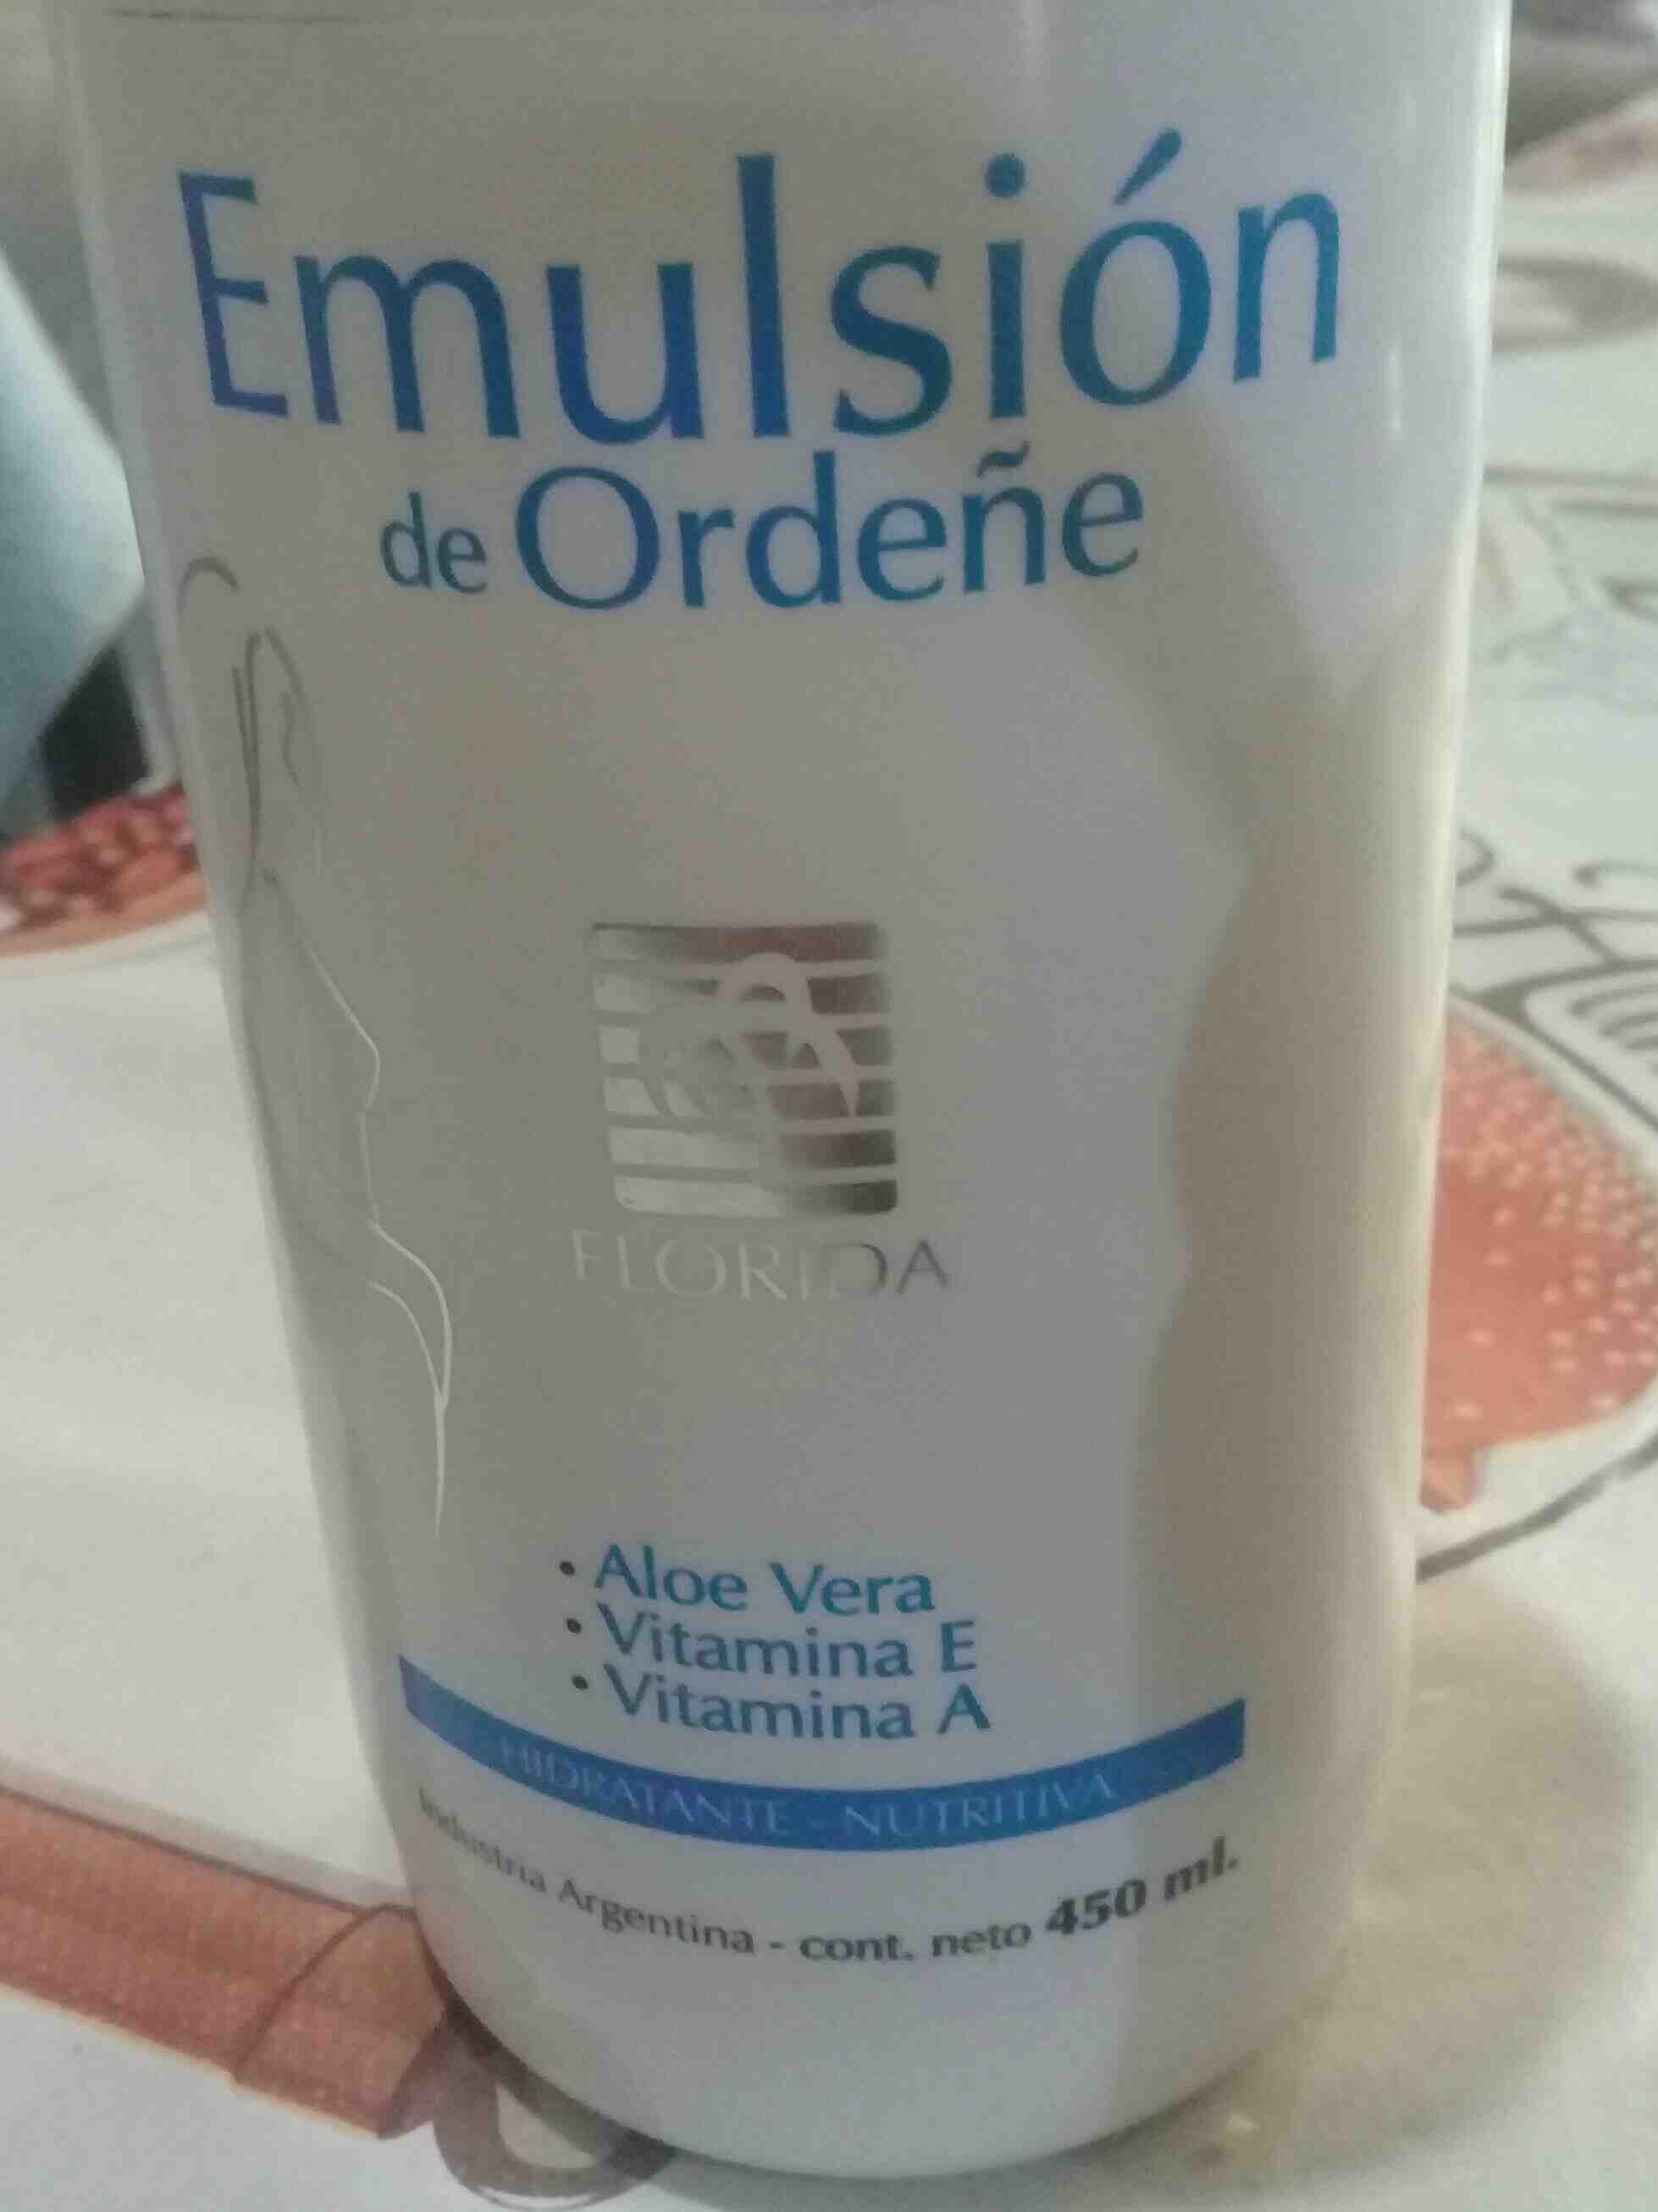 Emulsion de Ordeñe - Produit - en